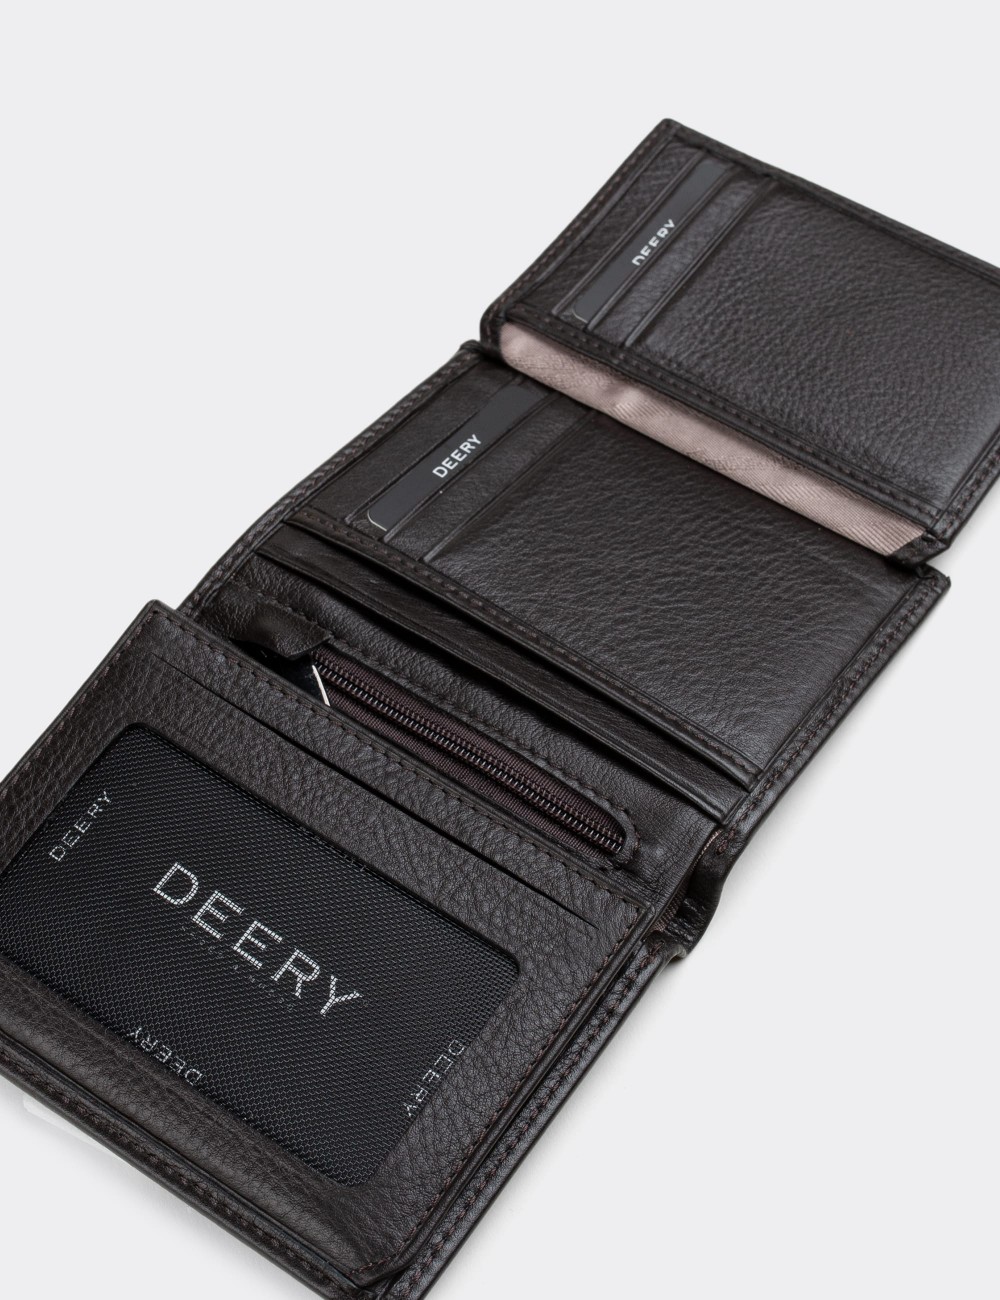  Leather Dark Brown Men's Wallet - 00288MKHVZ01